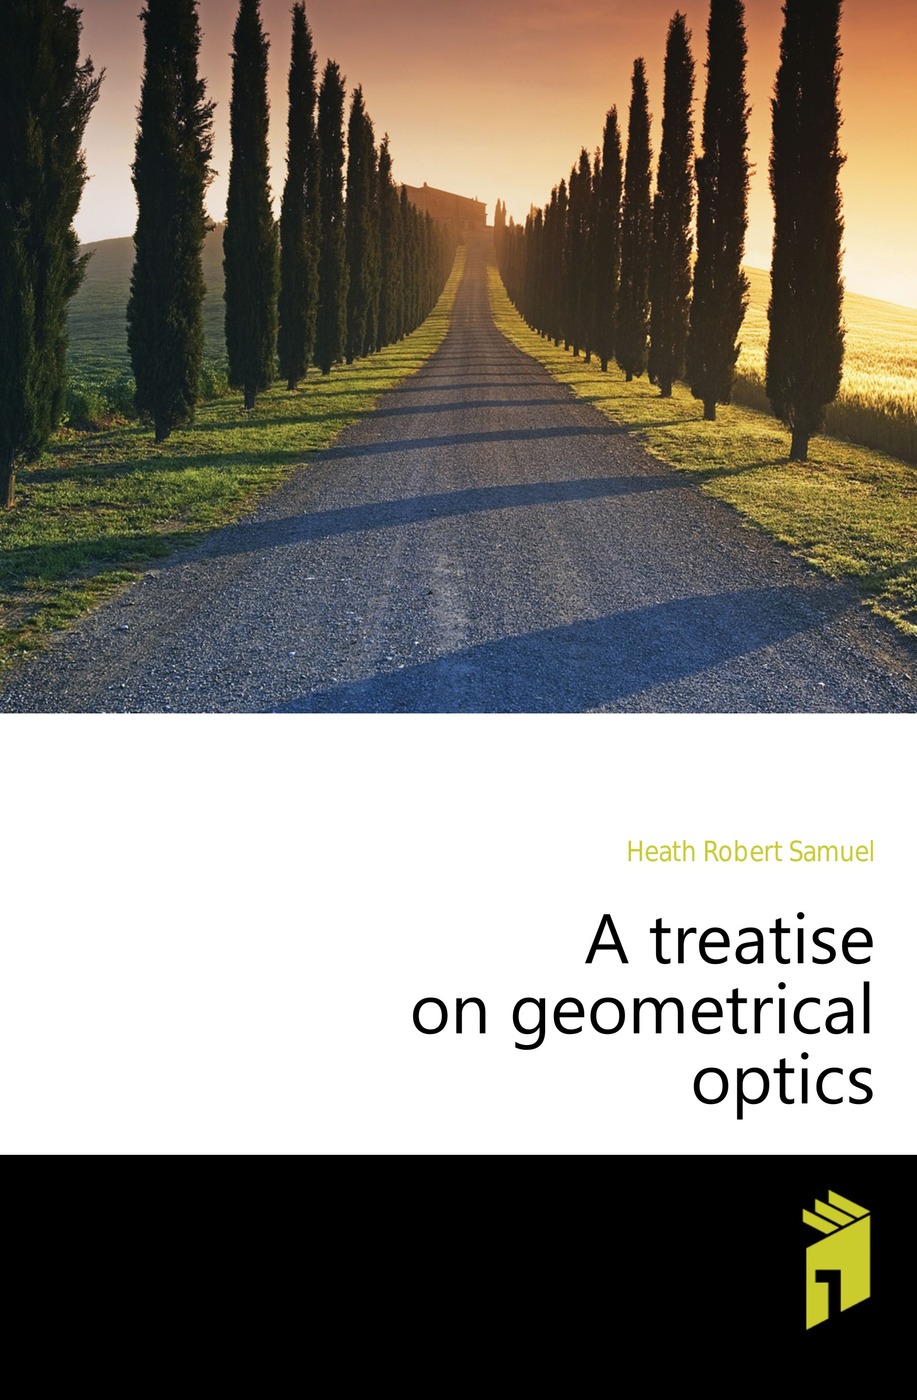 A treatise on geometrical optics